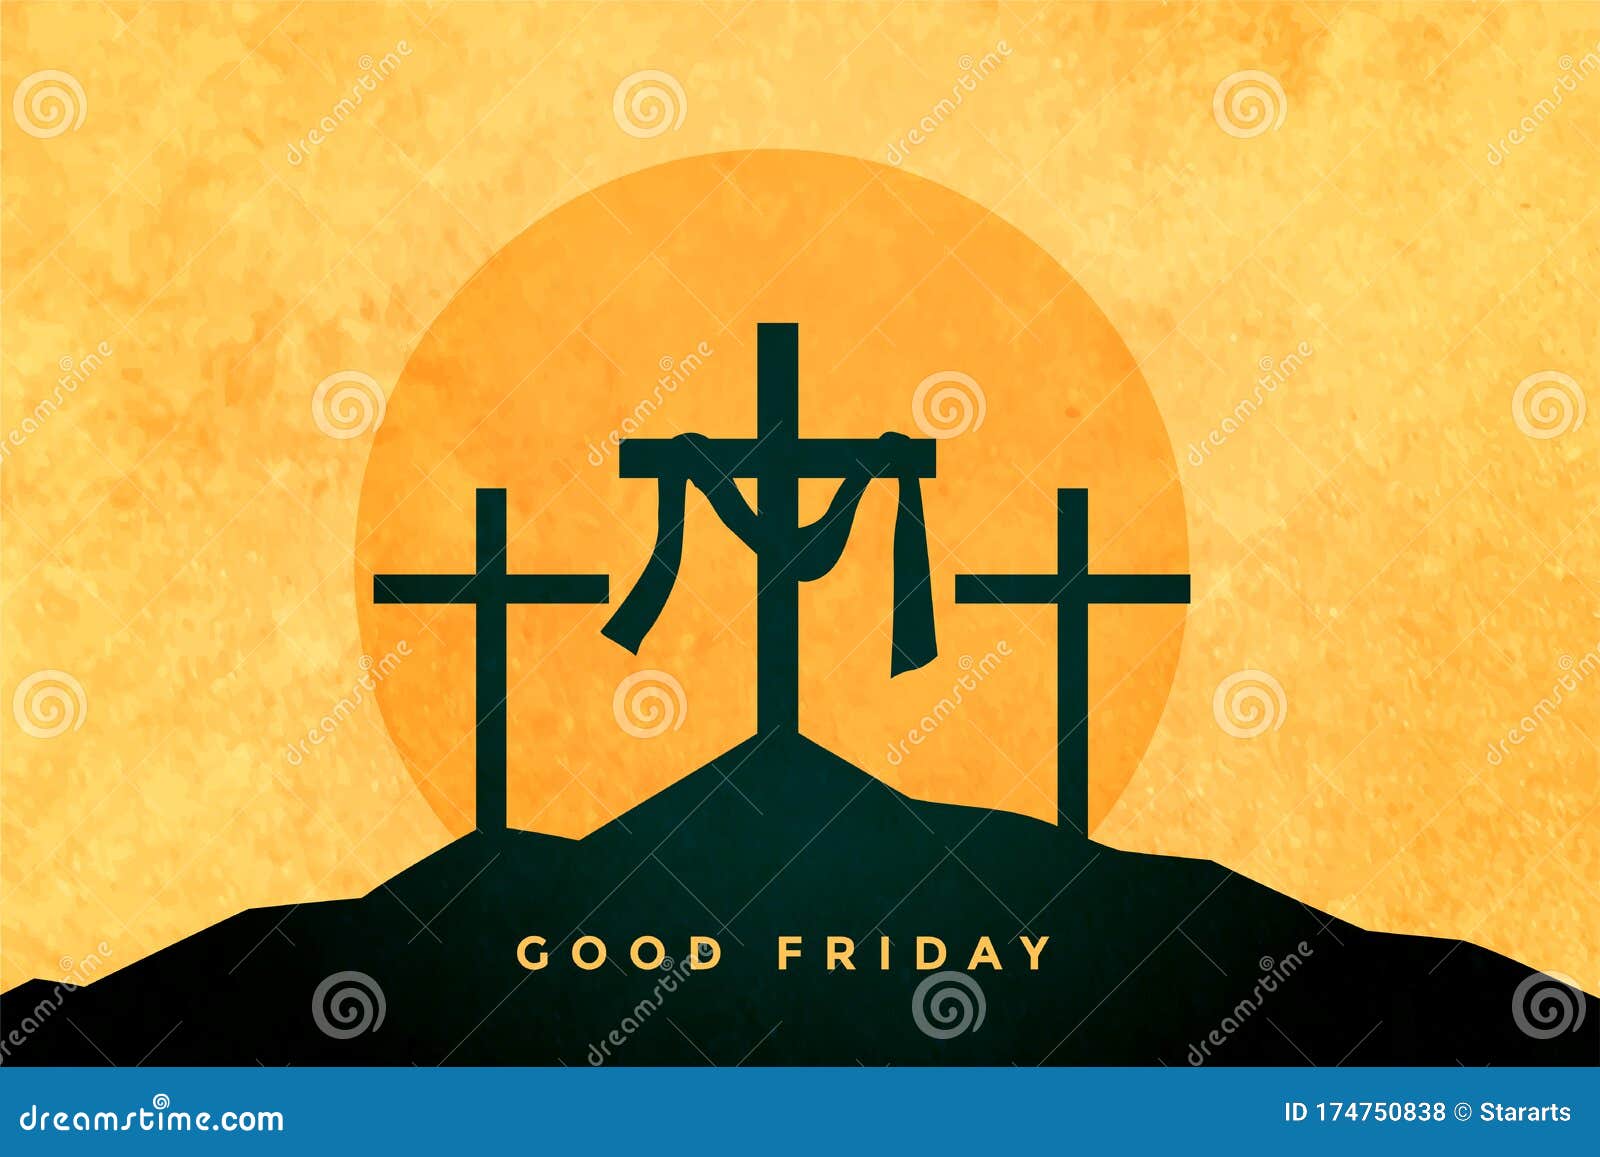 Good Friday or Easter Day Background Design Stock Vector - Illustration of  easter, good: 174750838